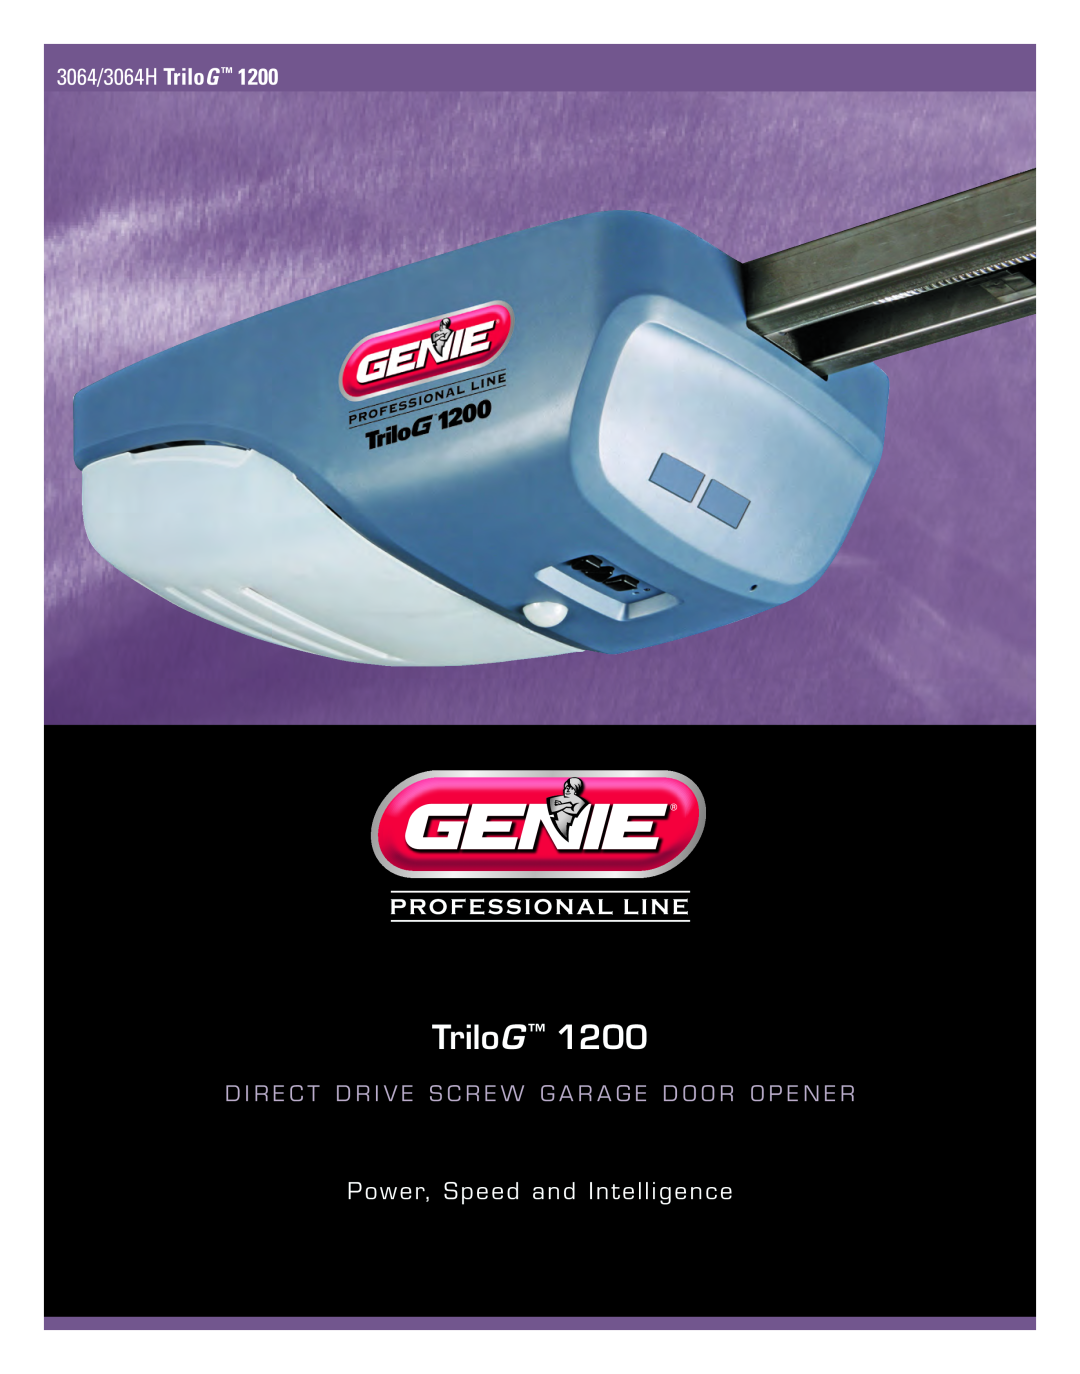 Genie GPOWER 900, TRUE manual Screw Drive, Operation & Maintenance Manual, GARAGE DOOR OPENER MODELS POWERLIFT 900, GPOWER 